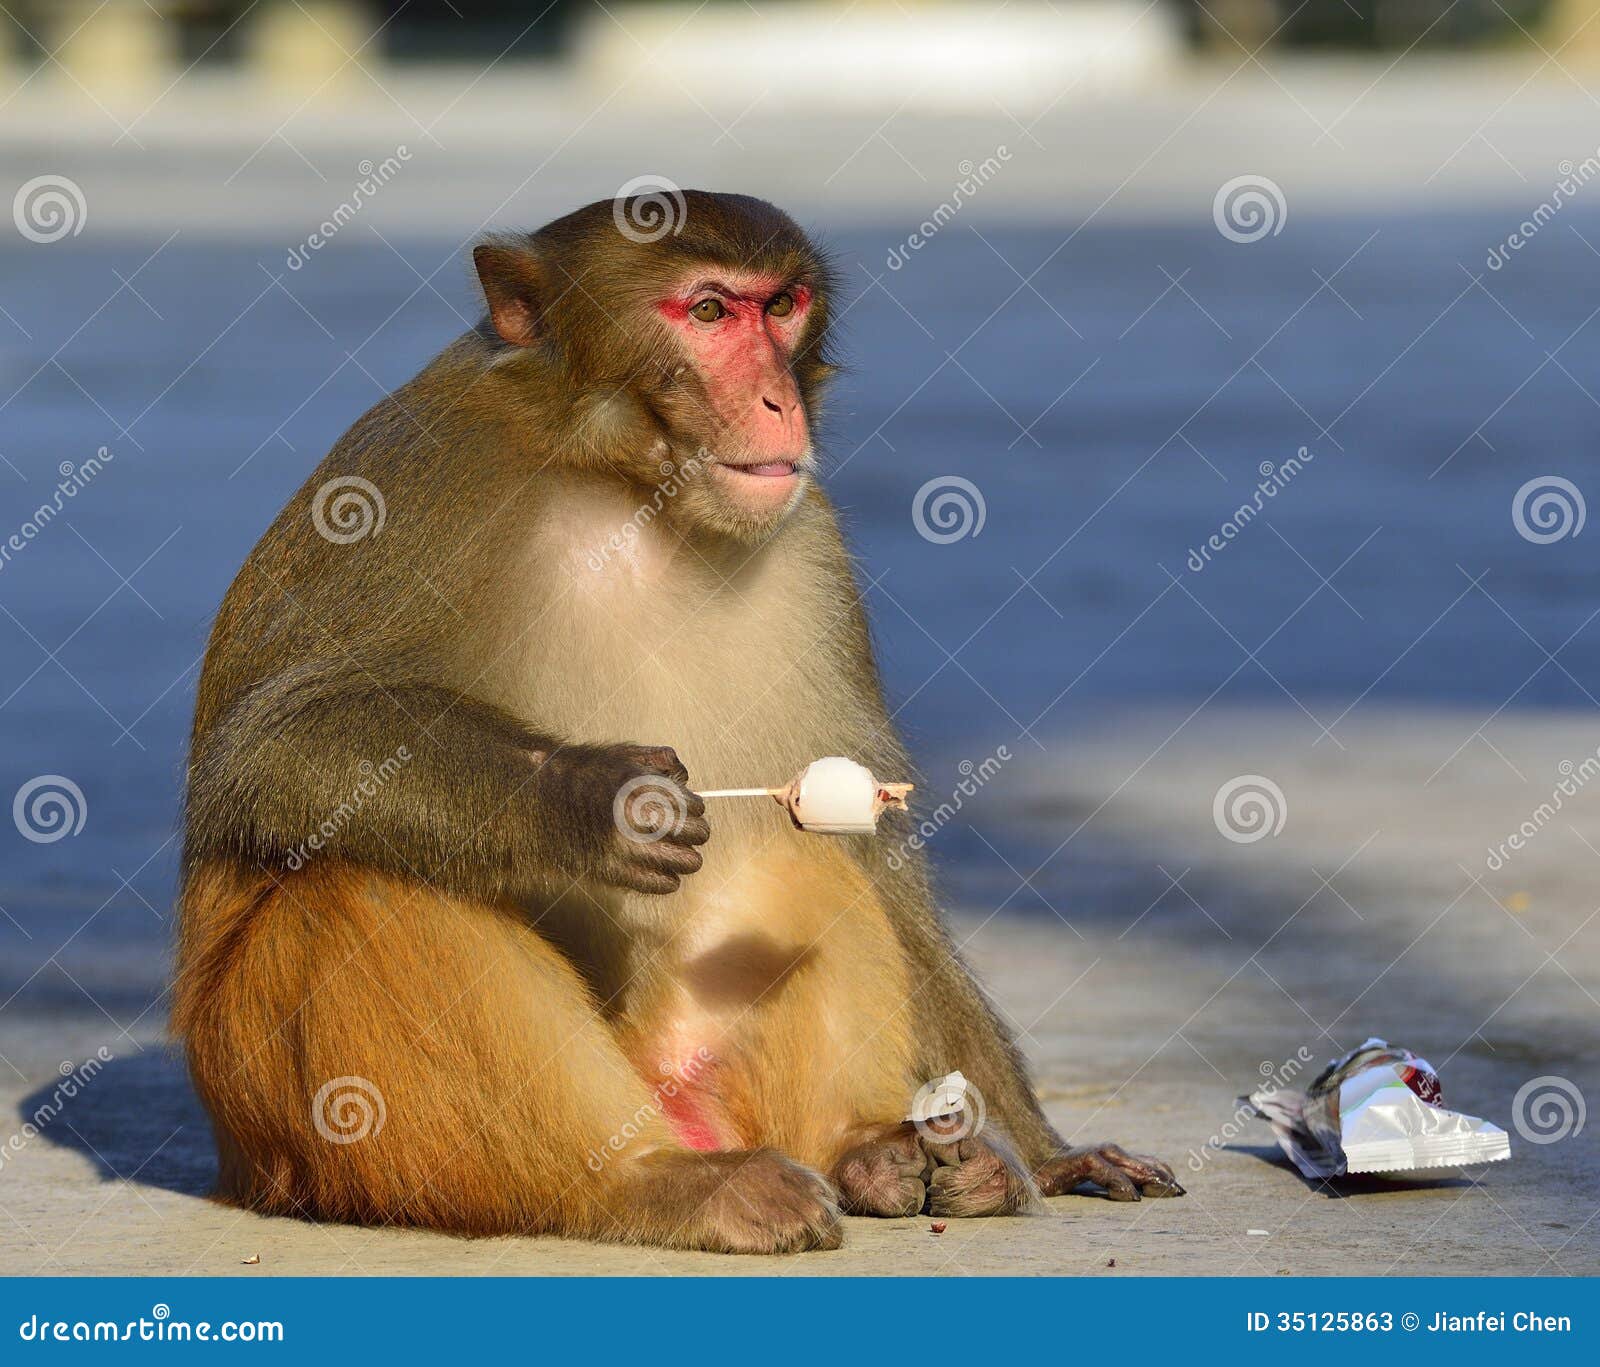 A Fat Monkey Esting Ice Cream Stock Photos - Image: 351258631300 x 1127